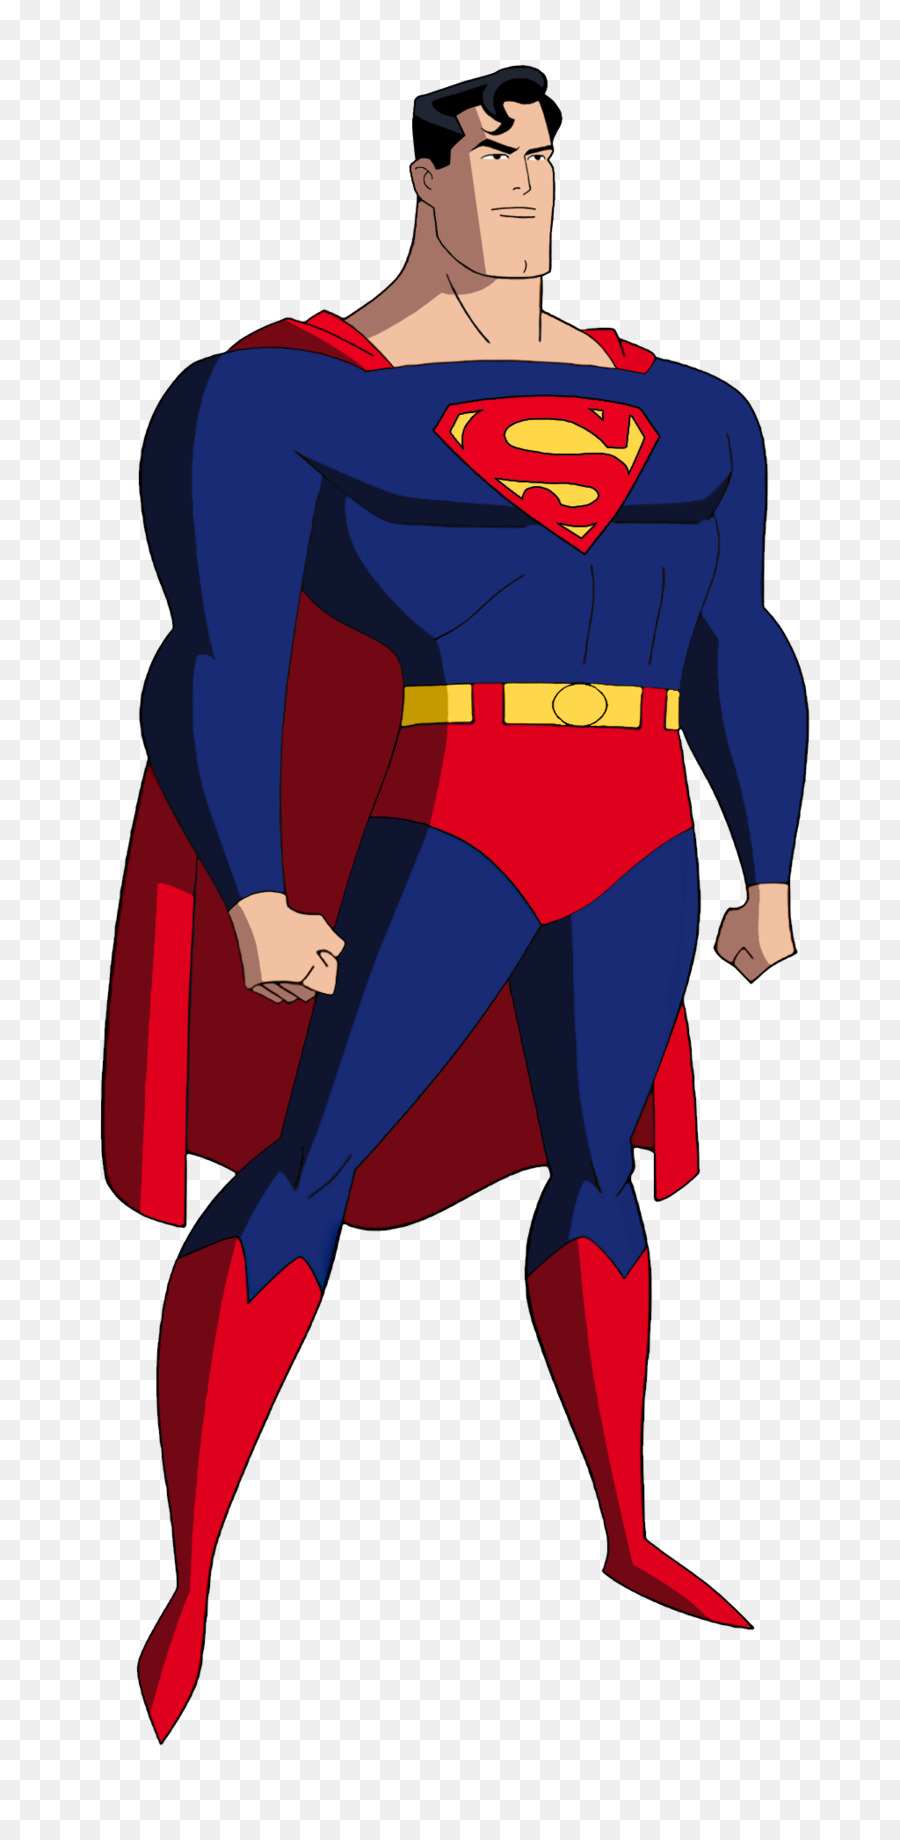 Superman Fleischer Studios Cartoon DC animated universe - cartoon superman png download - 1024*2072 - Free Transparent Superman png Download.